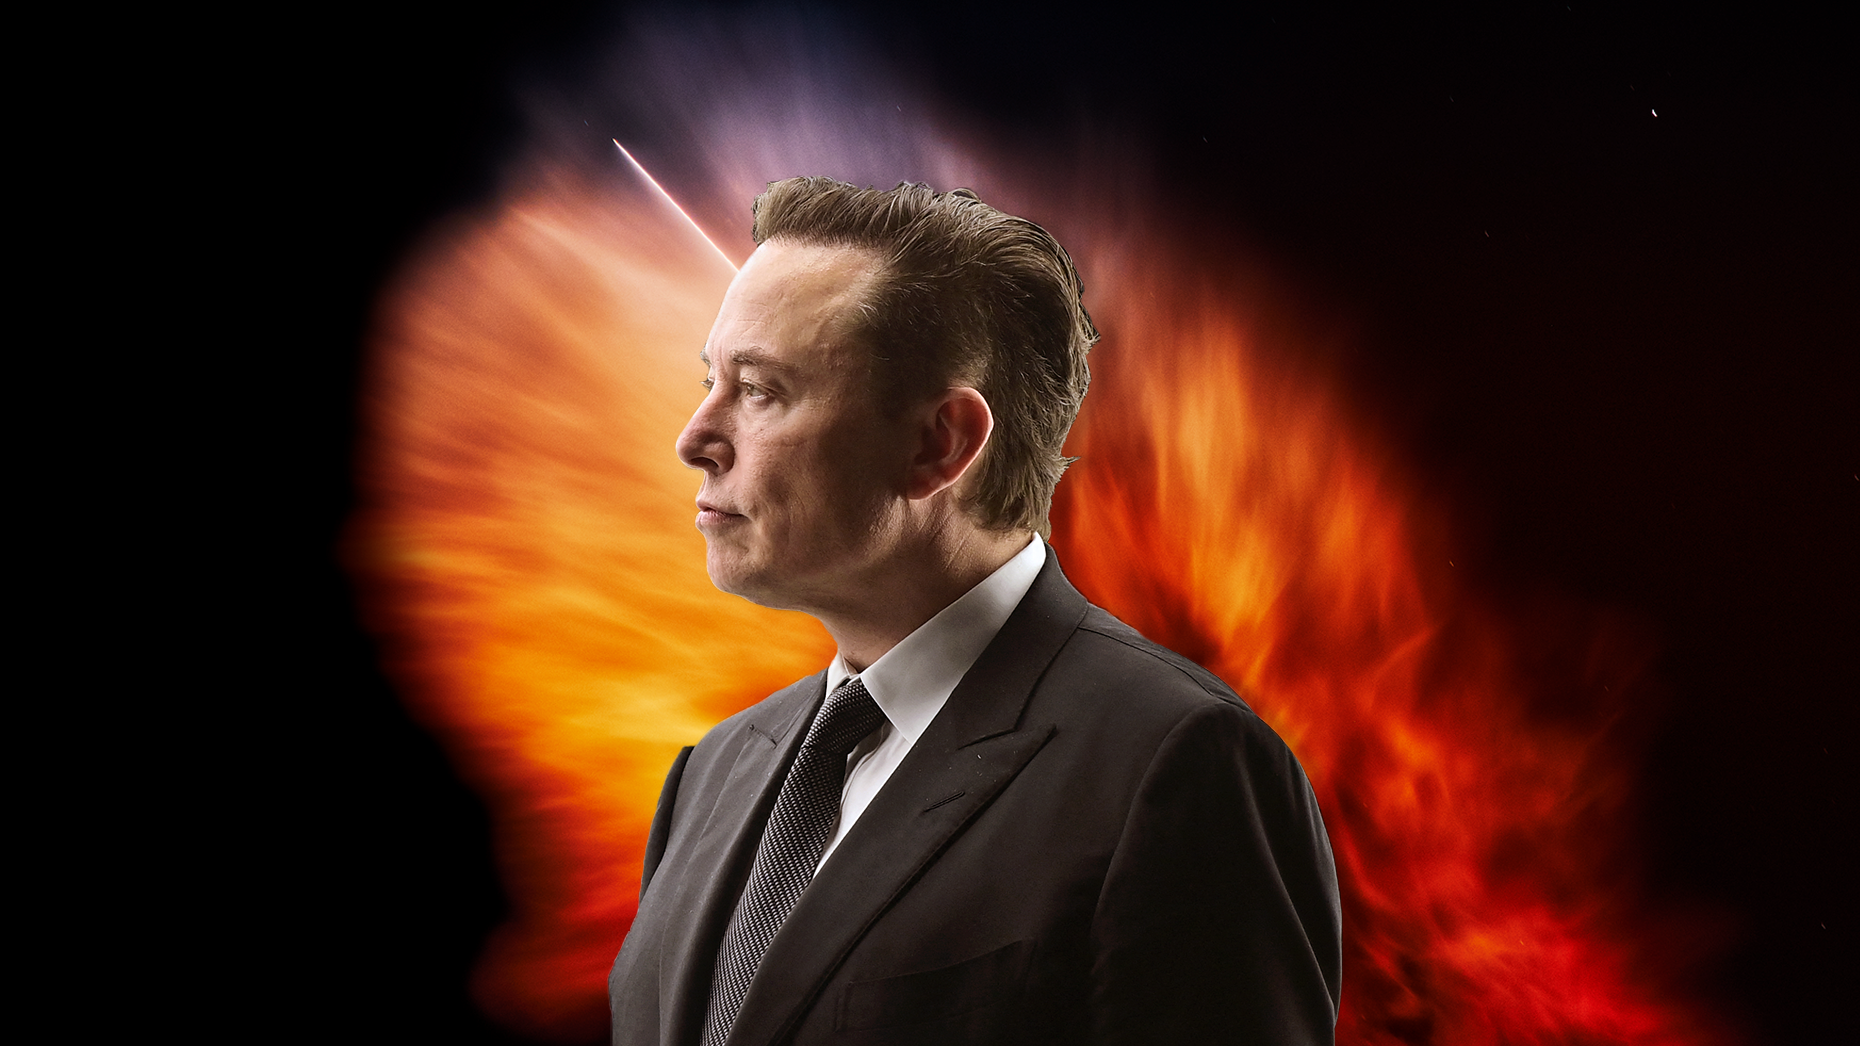 Elon Musk Wallpapers - Top 25 Best Elon Musk Backgrounds Download